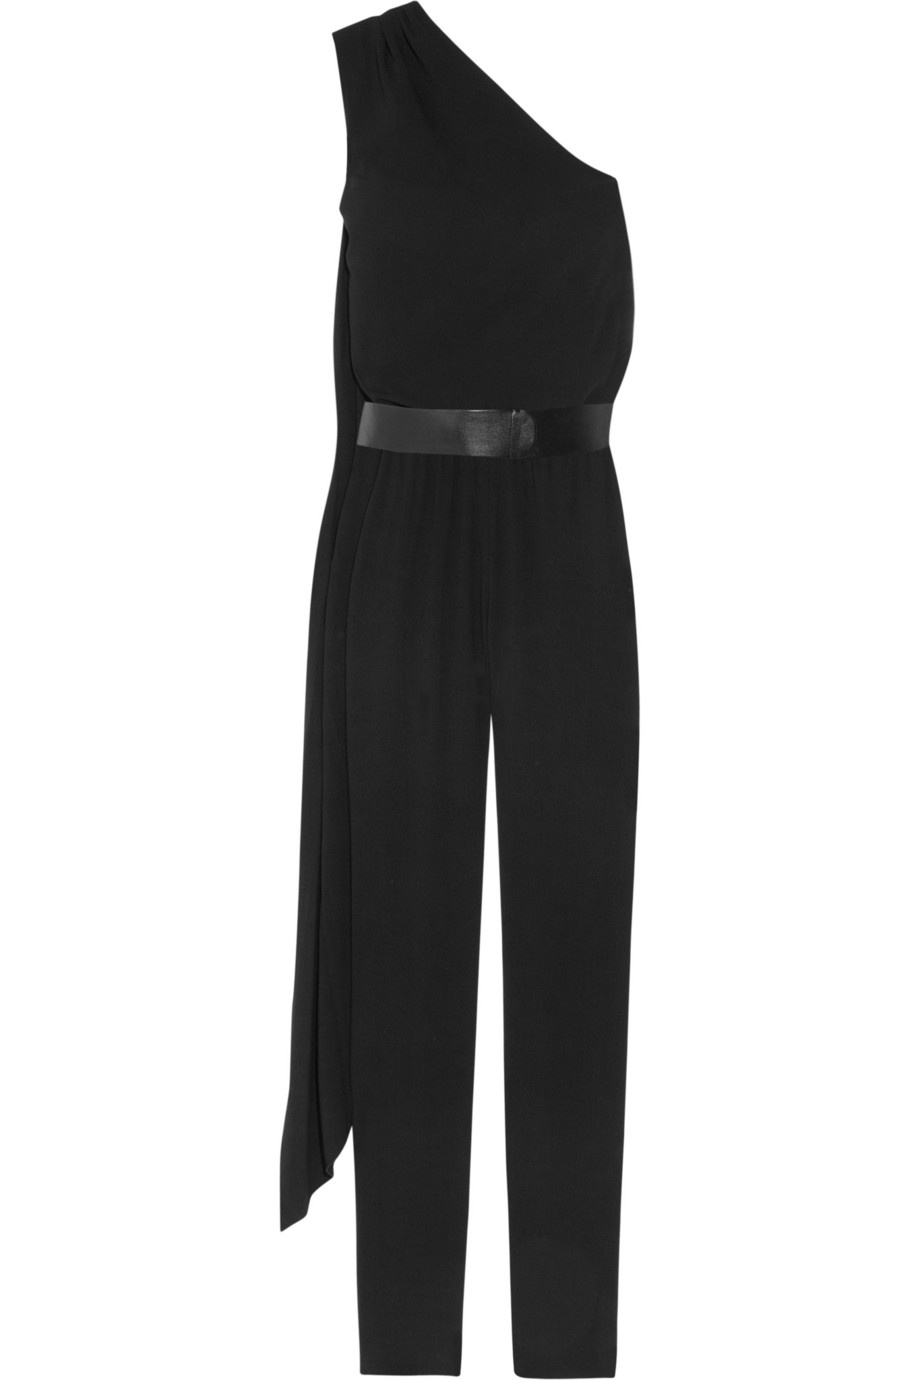 Lyst - Halston Stretch-crepe Jumpsuit in Black